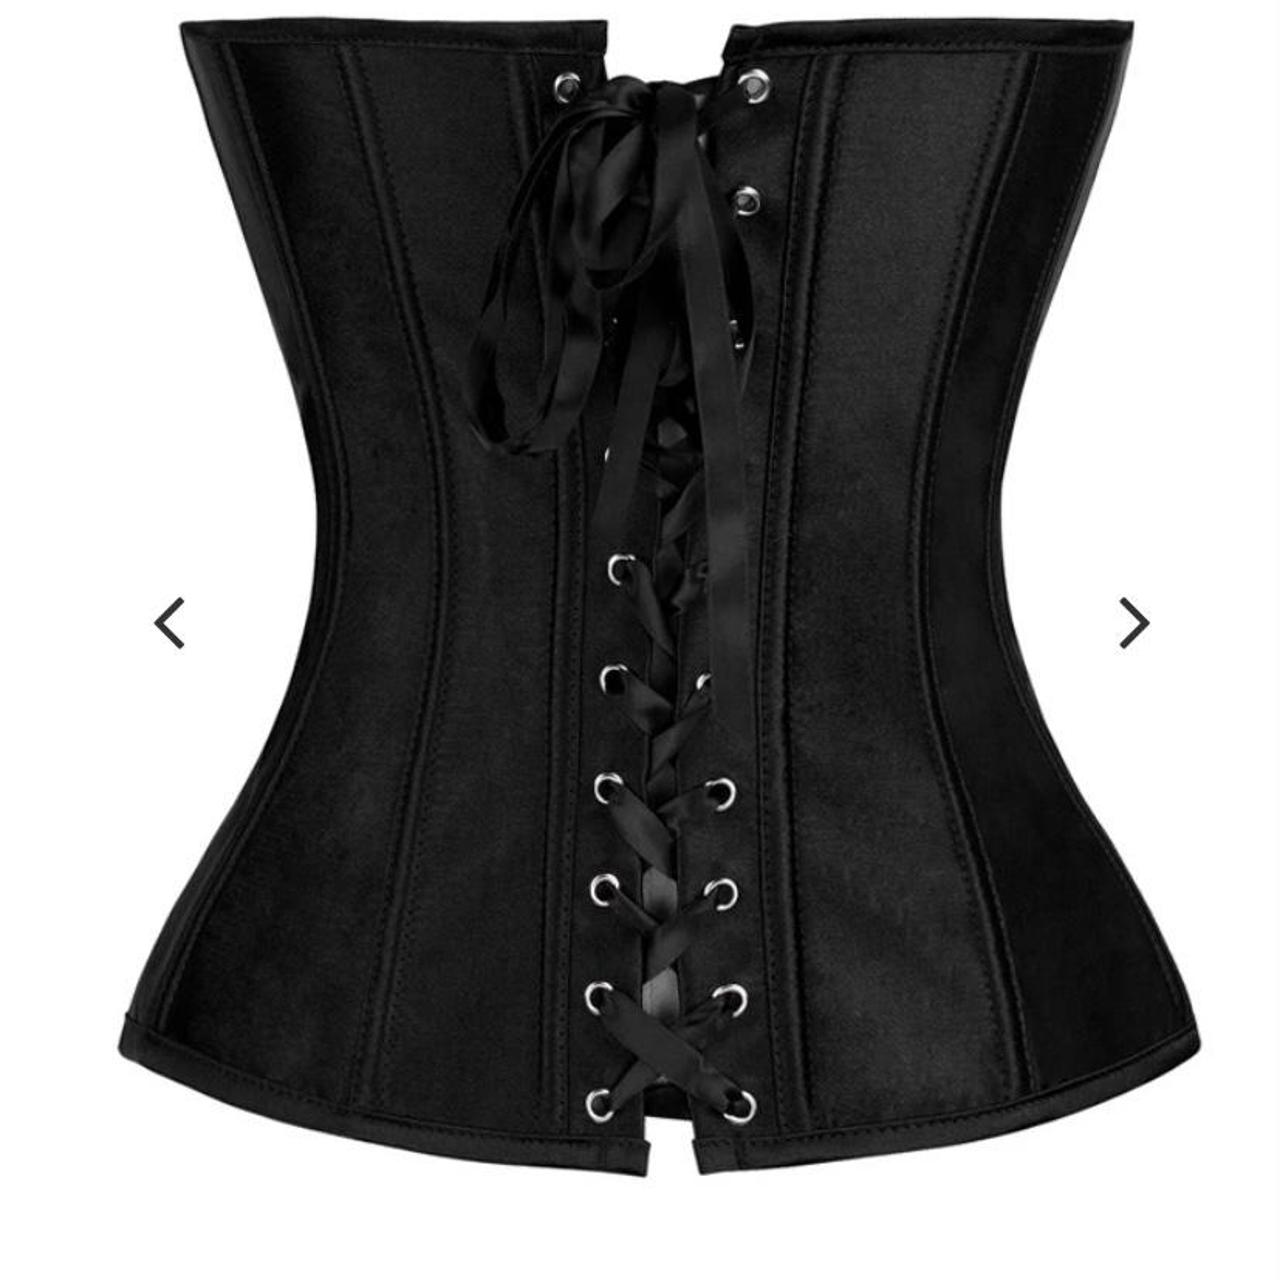 The most flattering corset ever. Felt v v sexy in it... - Depop